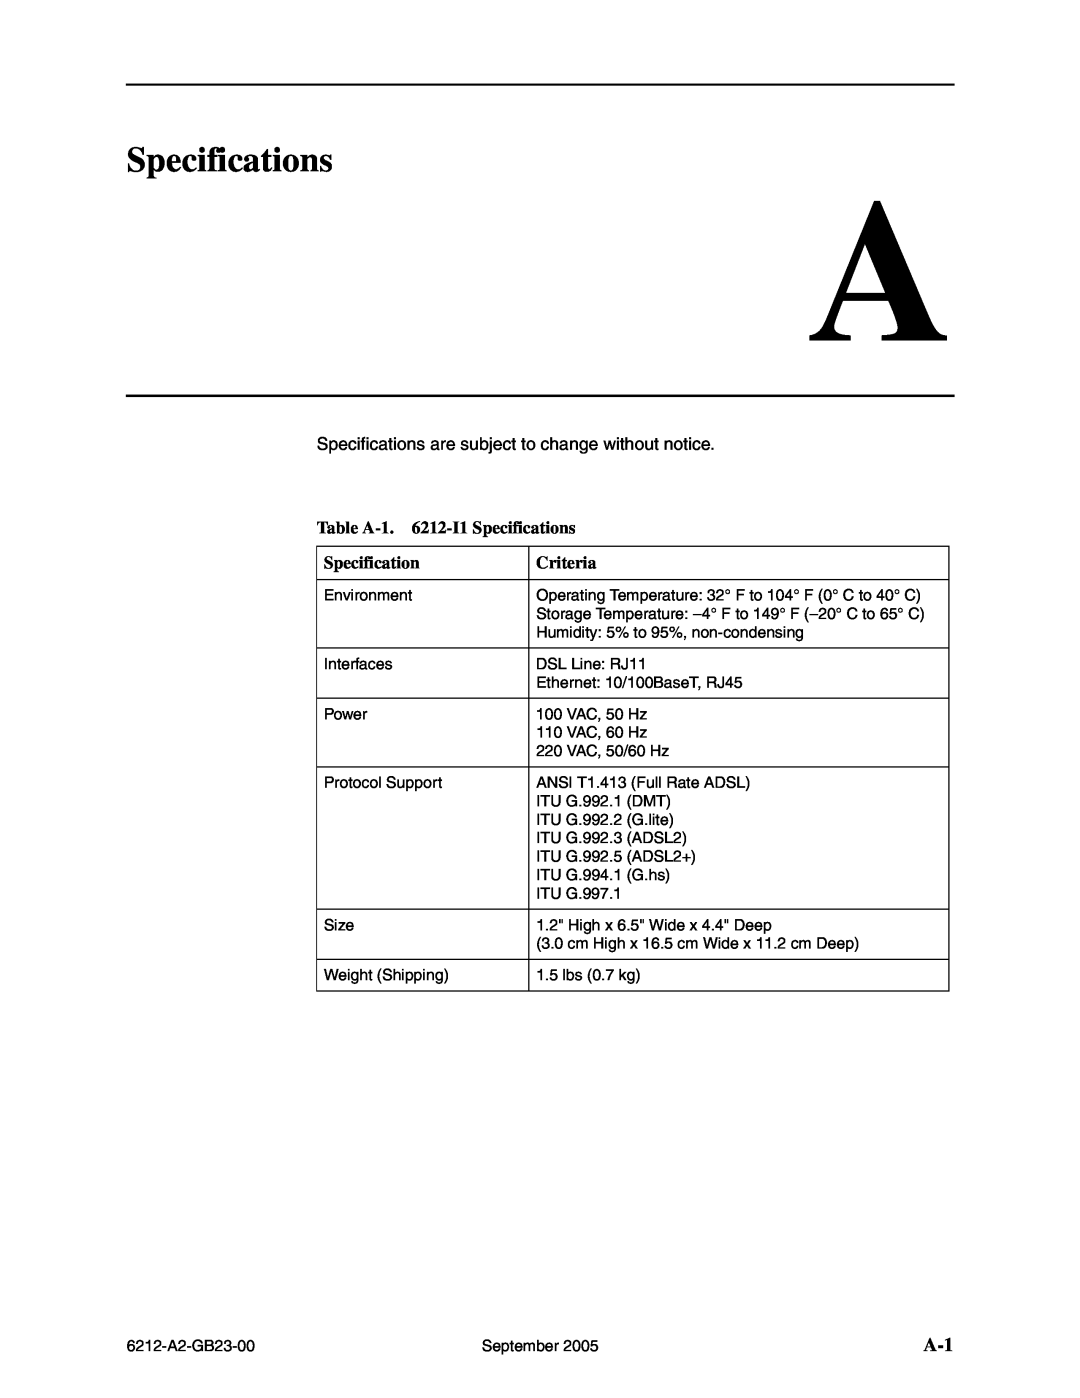 Paradyne manual Table A-1. 6212-I1 Specifications, Criteria 